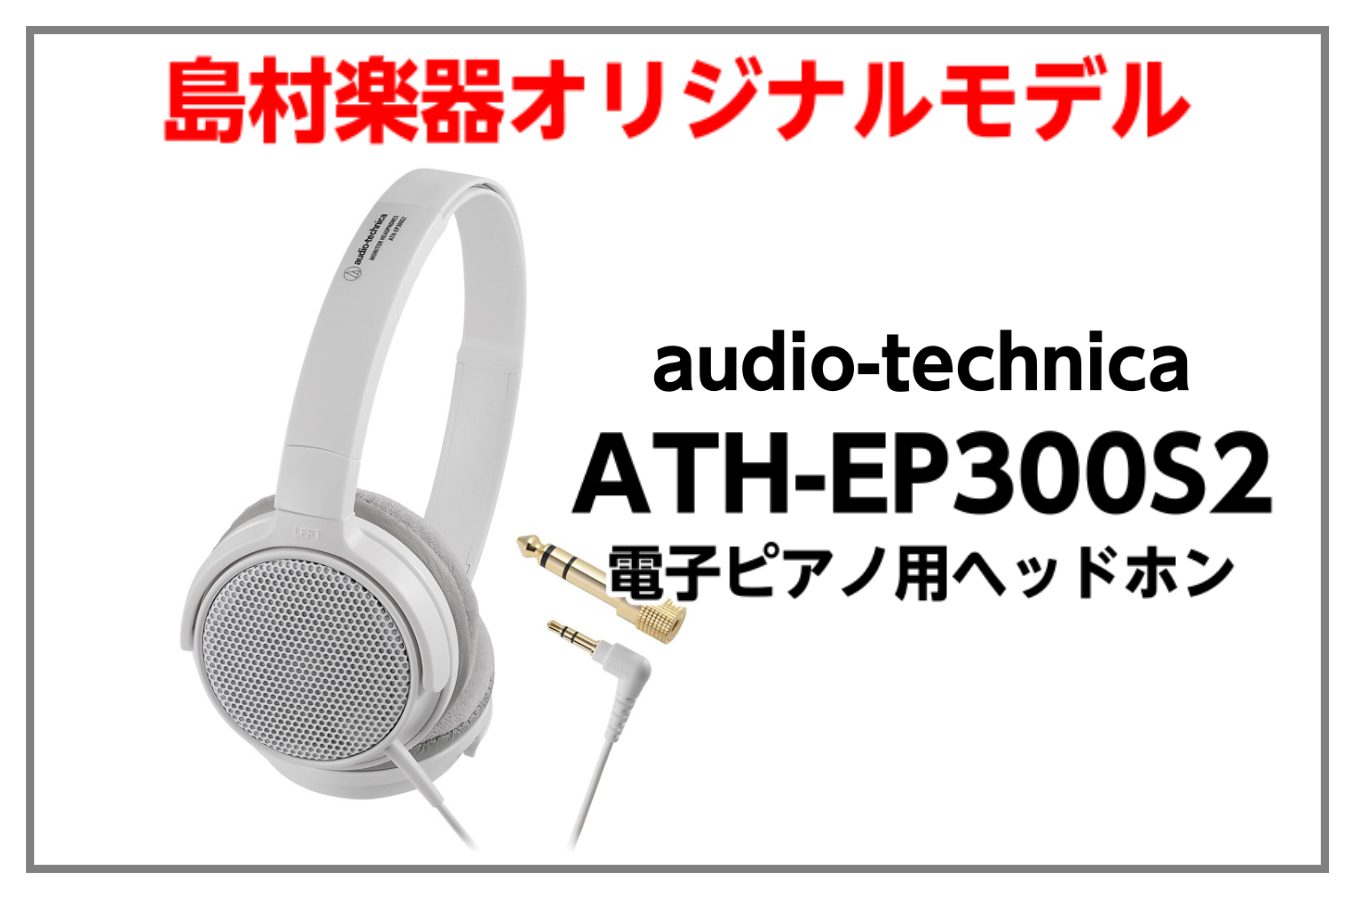 Audio-technica ATH-EP300 BK ブラック 電子ピアノ用ヘッドホン